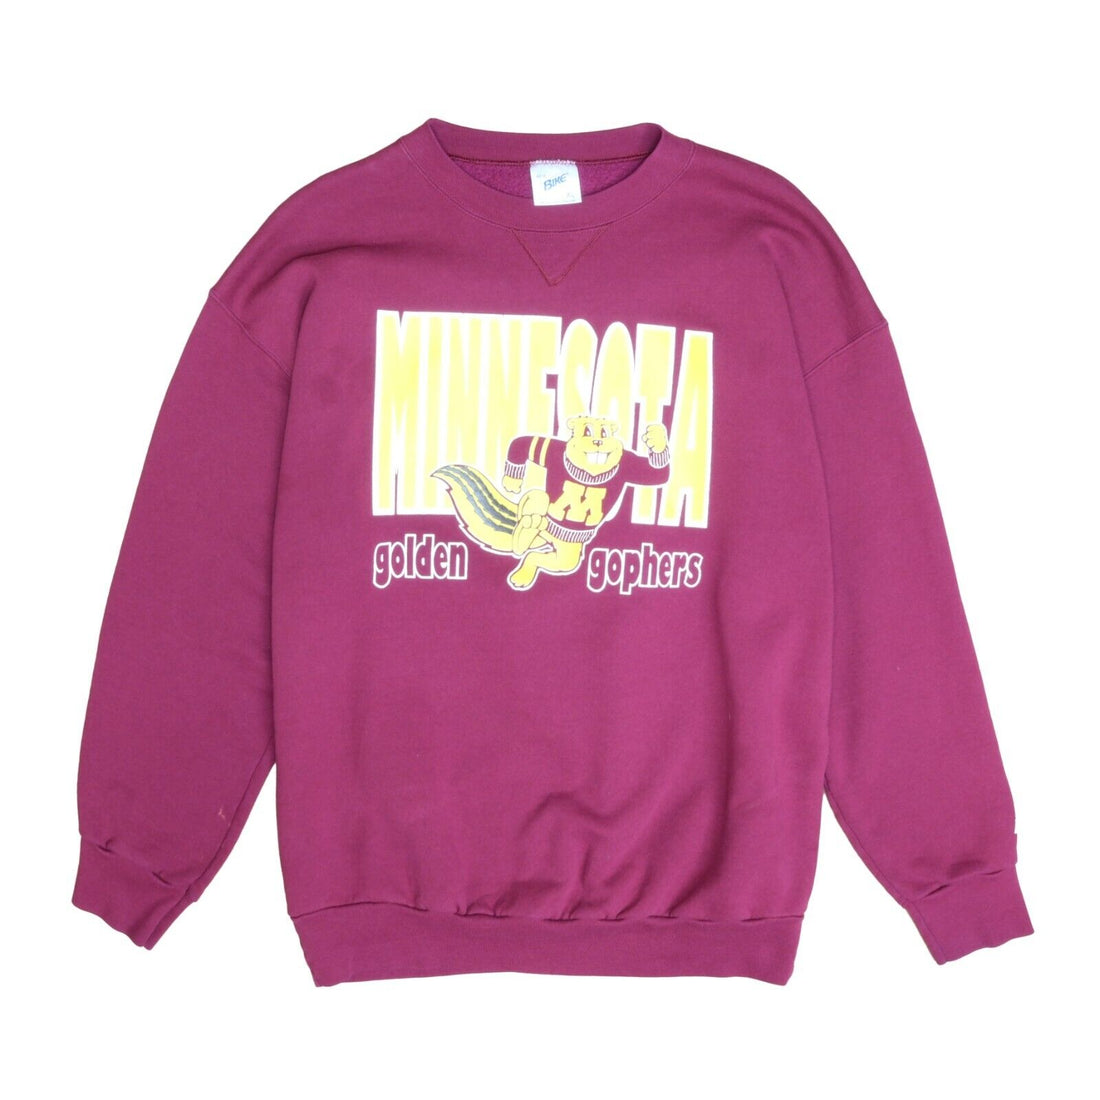 Vintage Minnesota Golden Gophers Sweatshirt Crewneck Size XL 90s NCAA